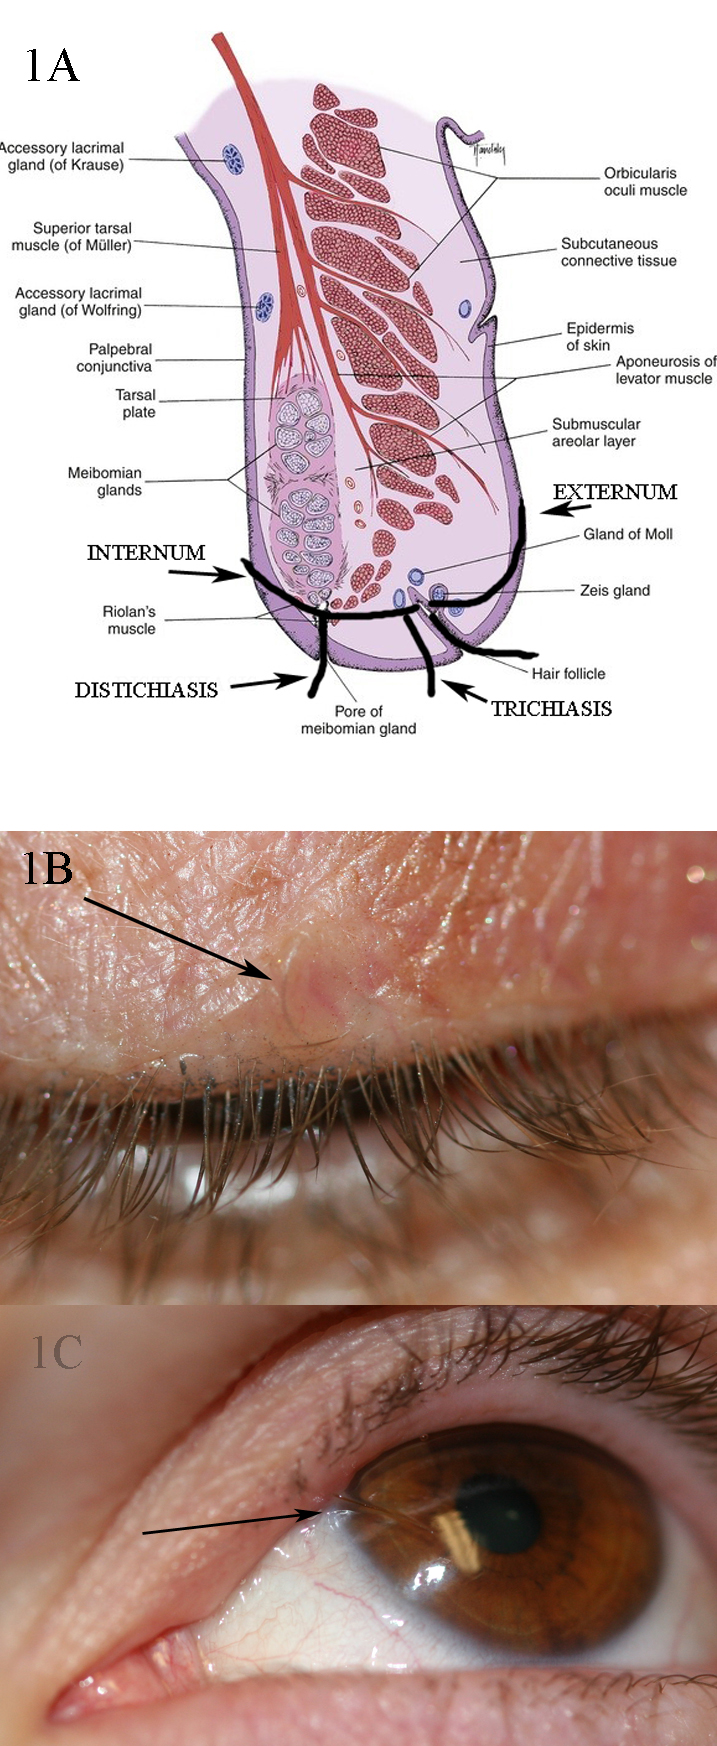 1A: shows the different orientations of lashes in trichiasis, distichiasis, cilia incarnata internum and cilia incarnata externum